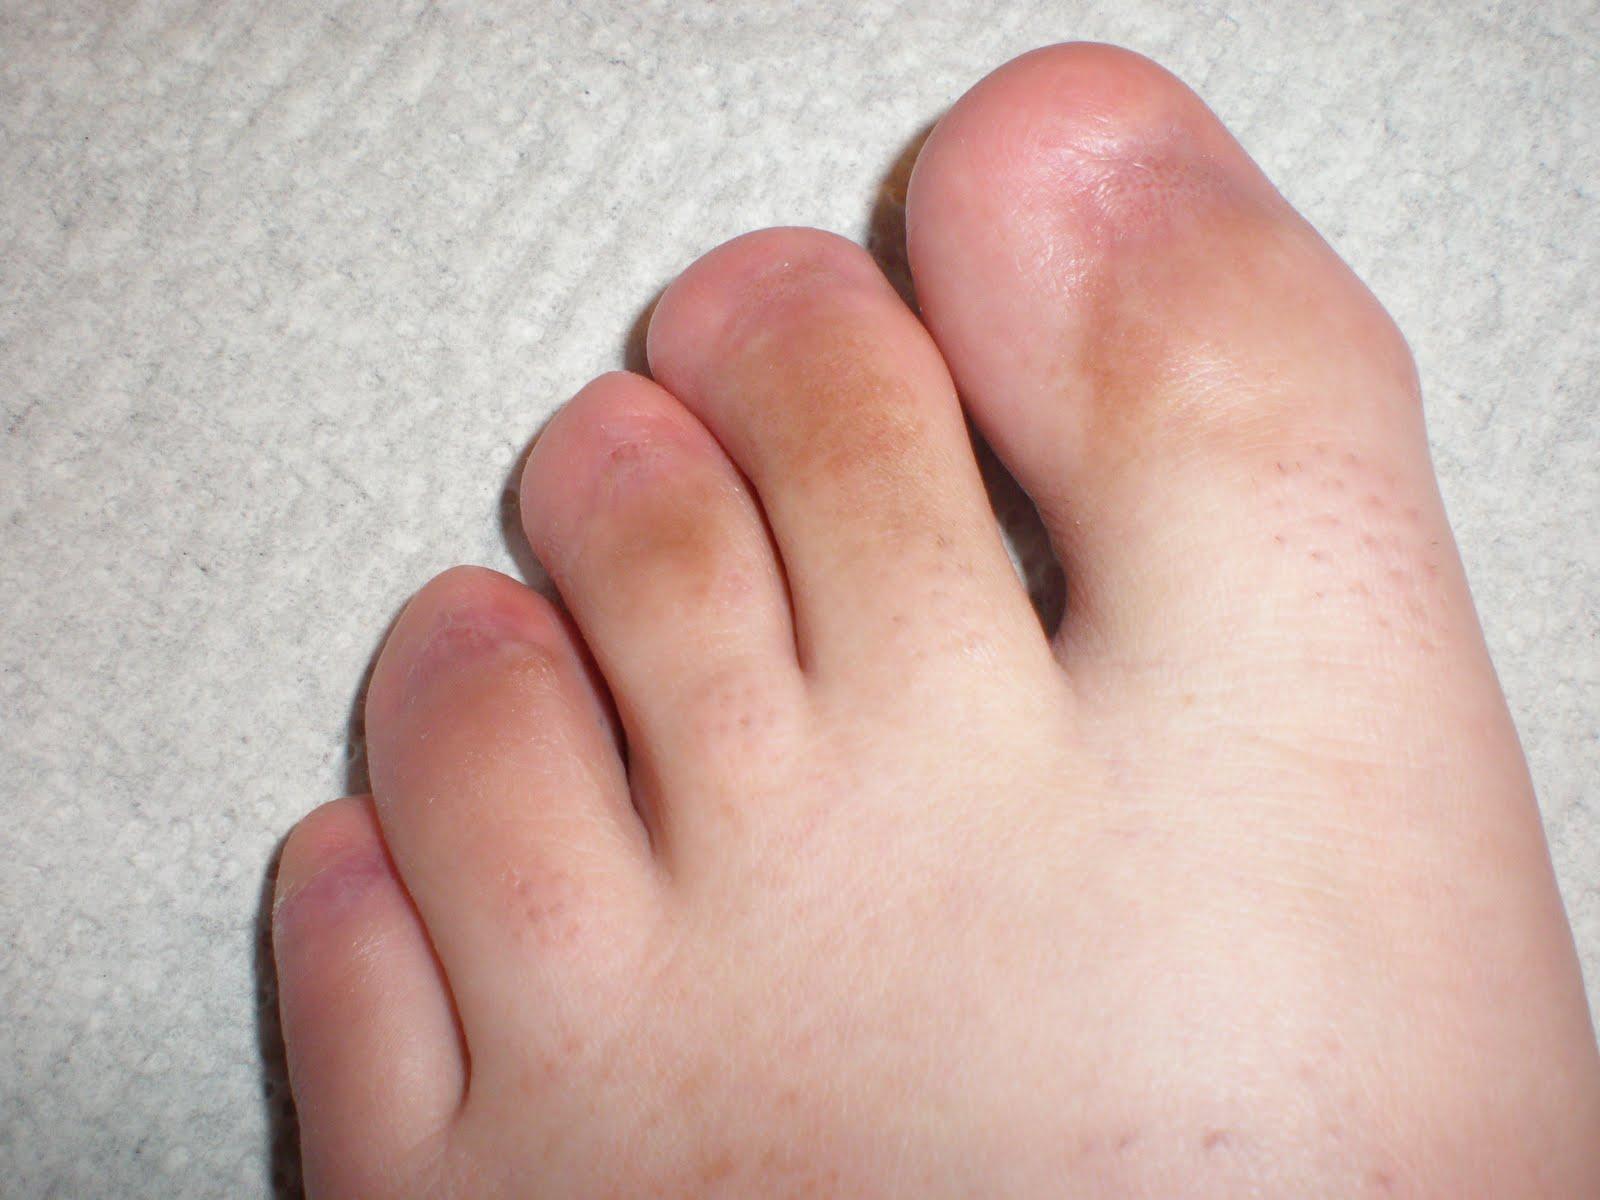 Black fetish foot pic